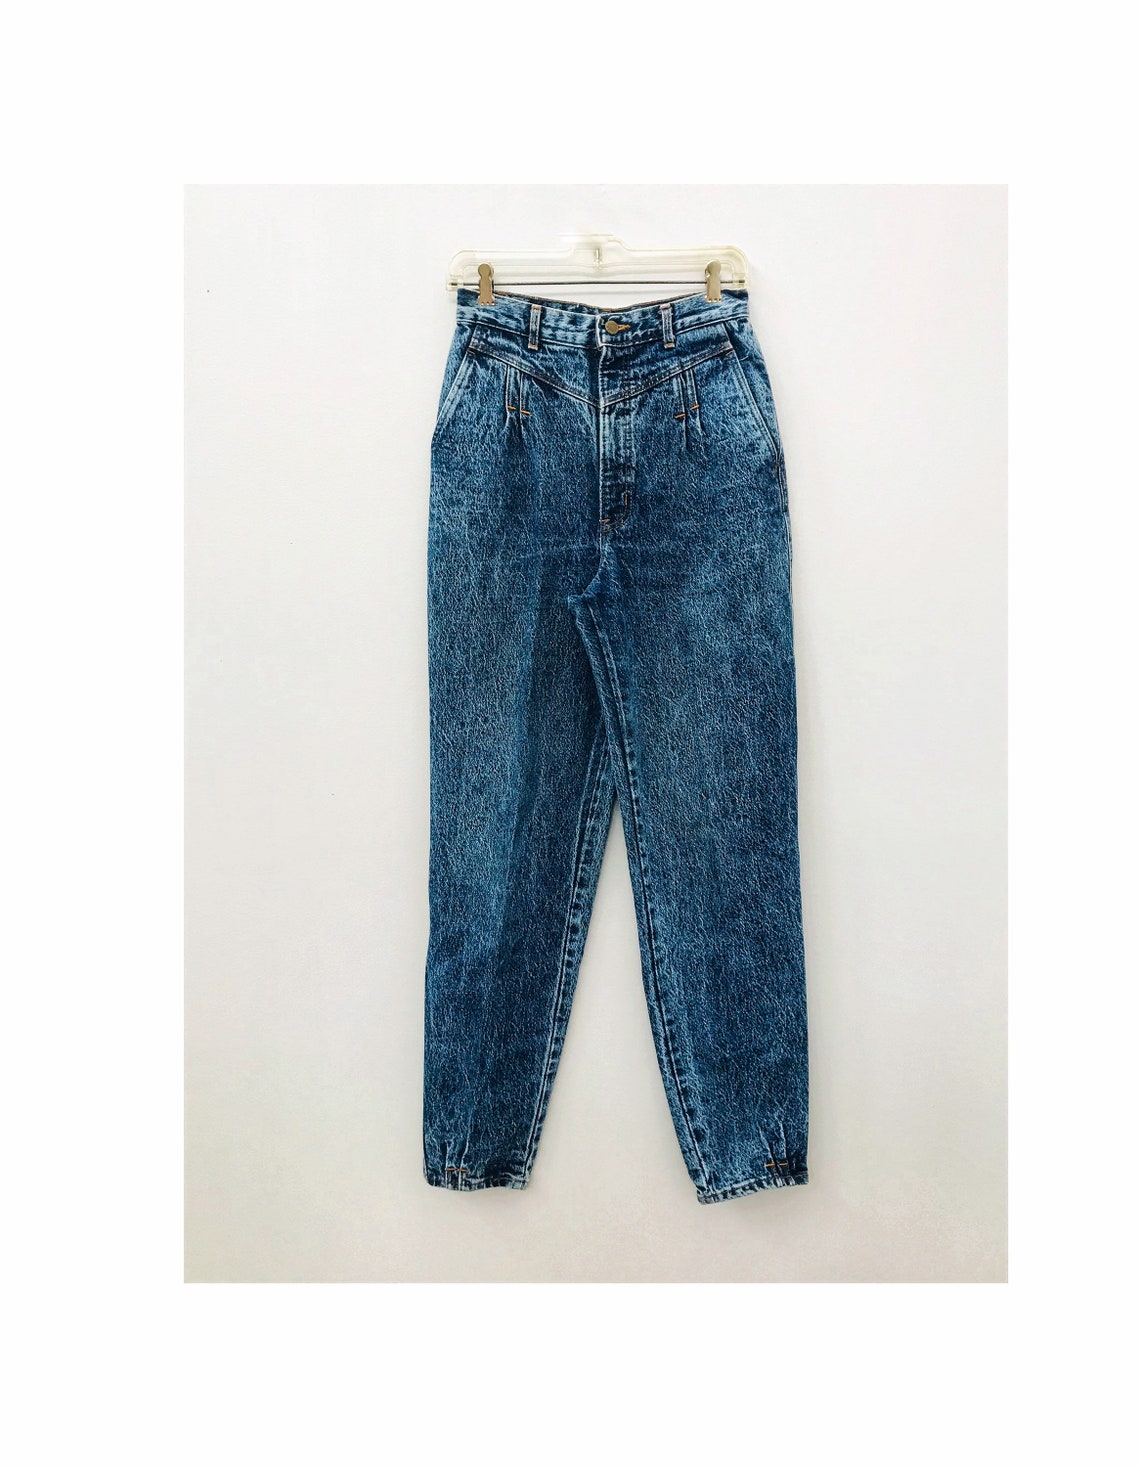 Vintage 1980s Sunset Blues Jeans 80s High Waist Tapered Leg | Etsy